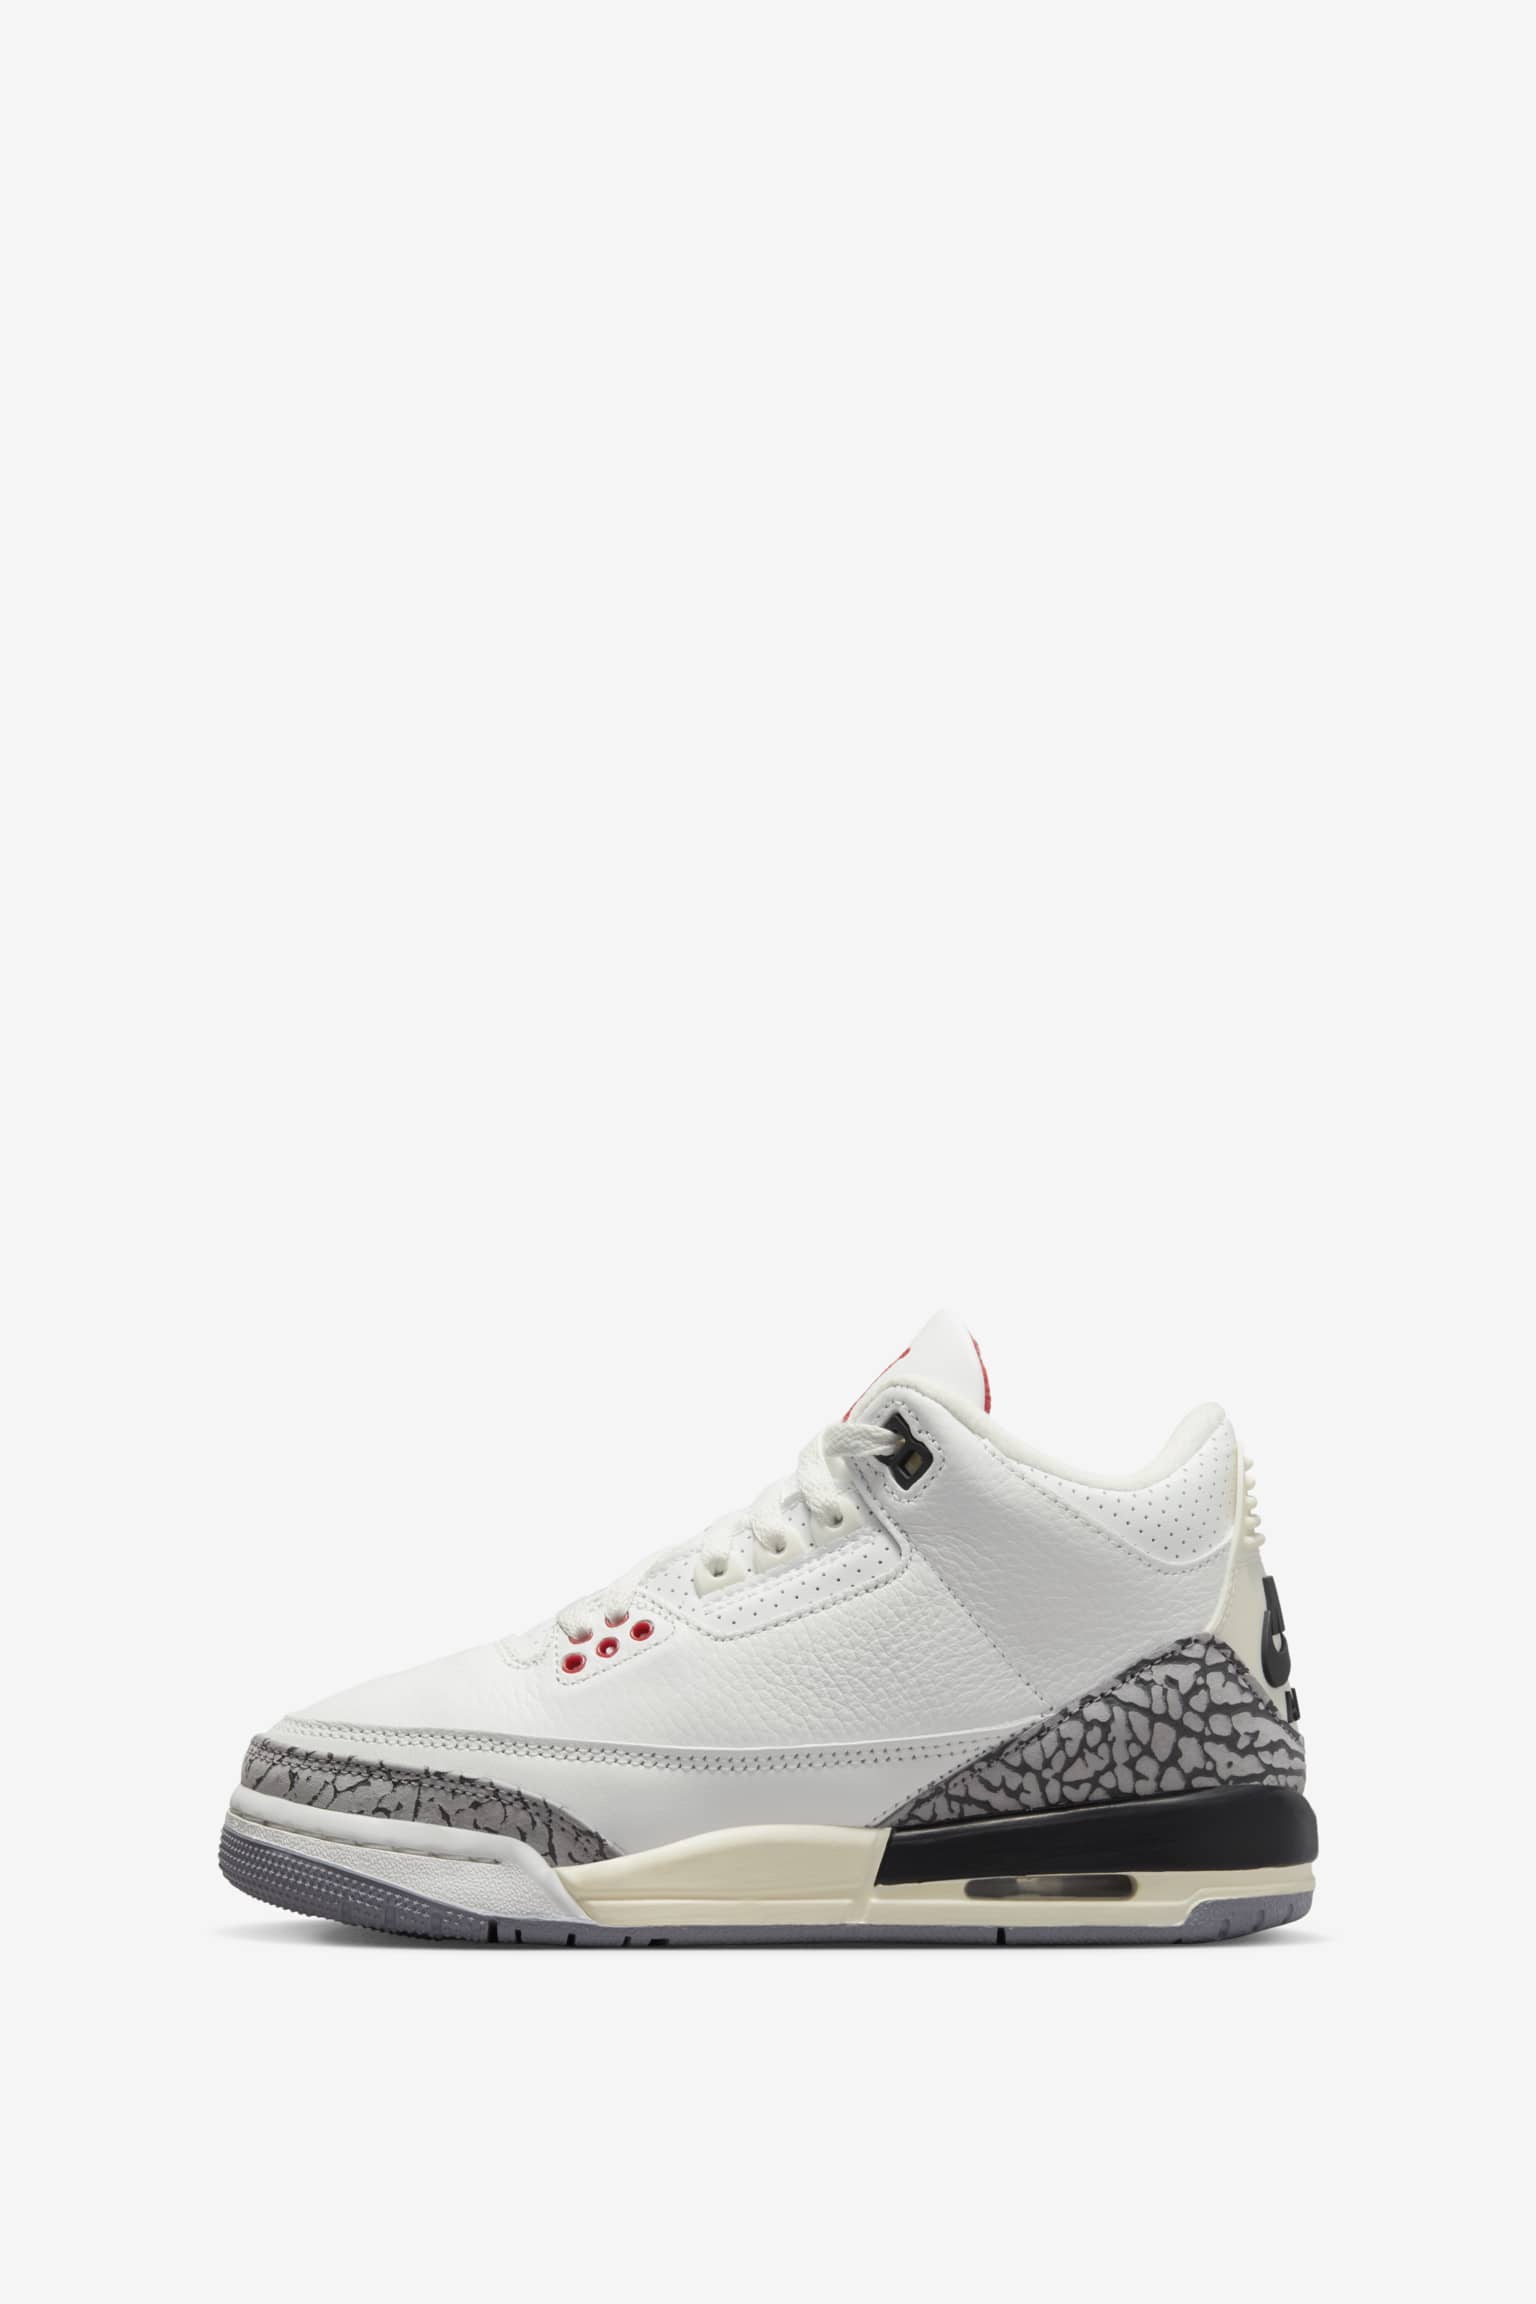 Air Jordan 3 White Cement Reimagined AJ3靴